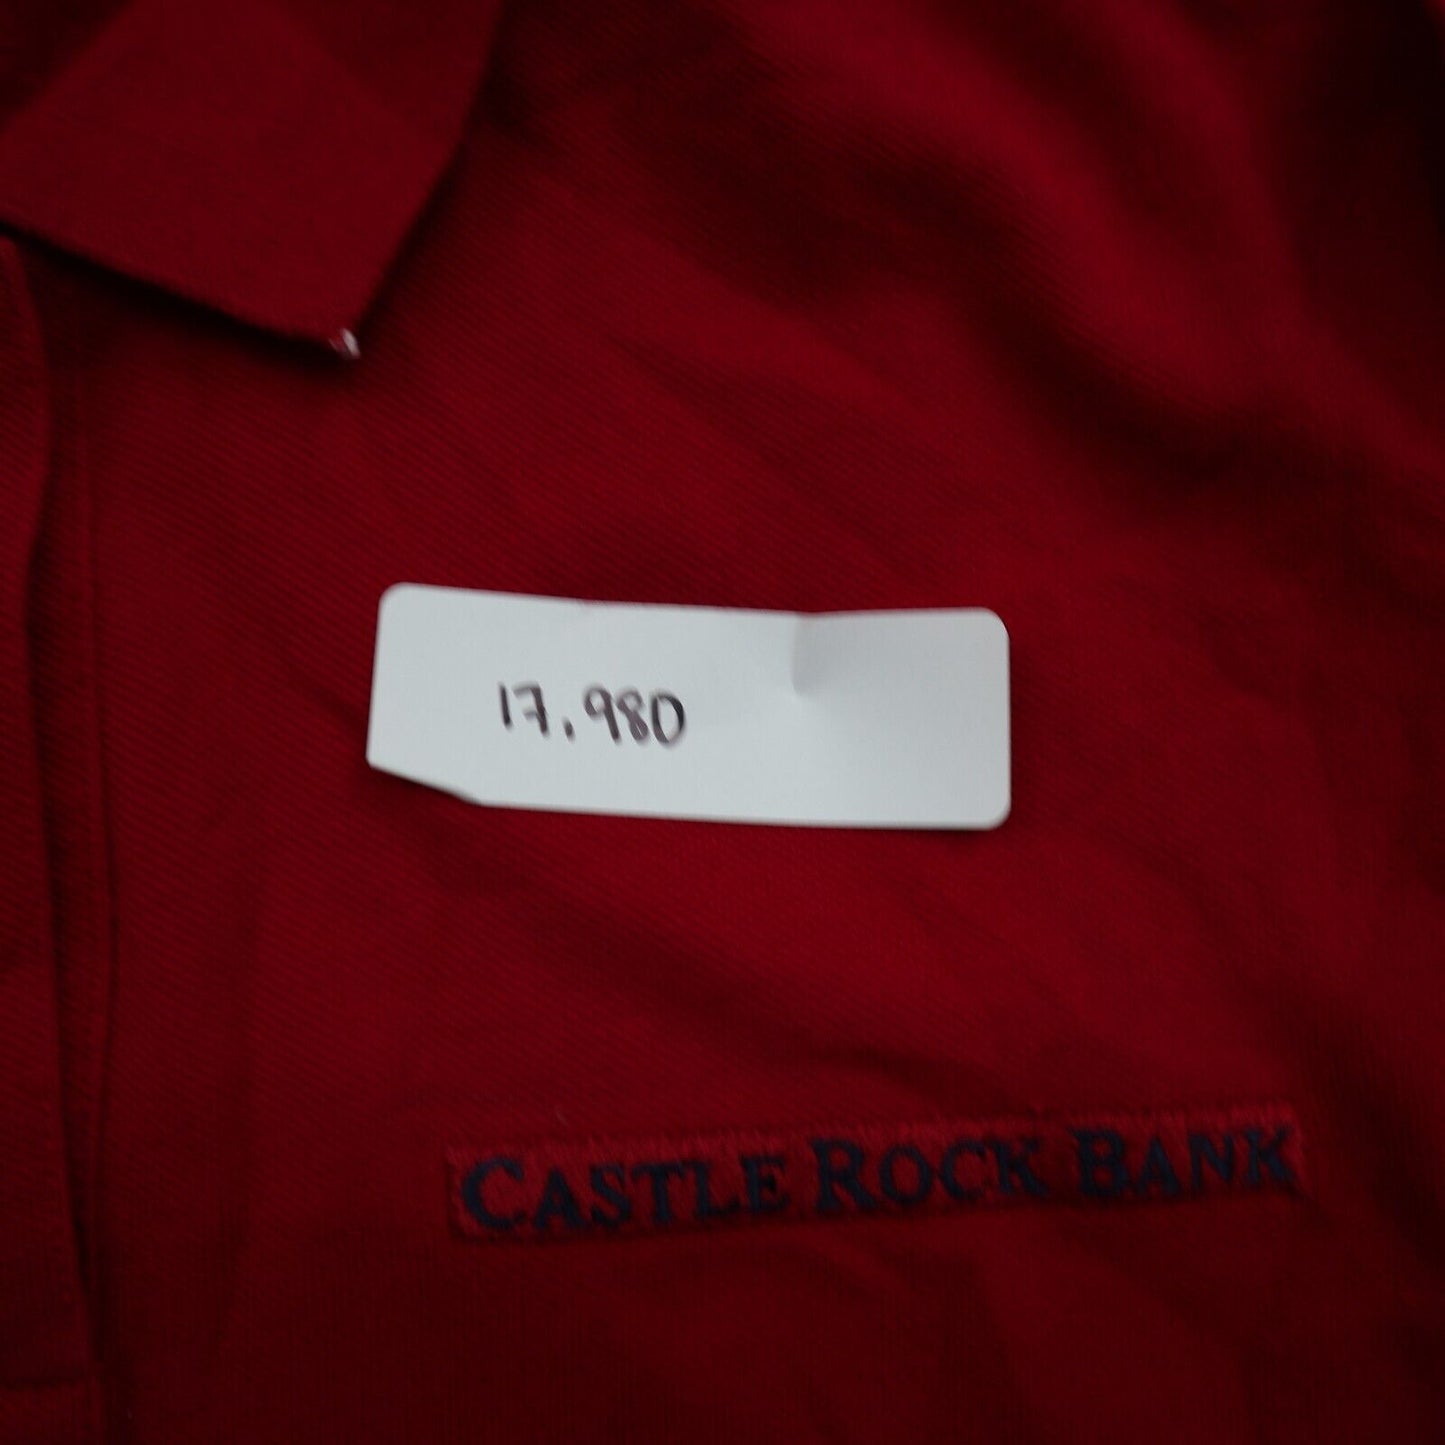 Lands End Mens Castle Rock Bank Logo Golf Polo Shirt Short Sleeves Red Size L